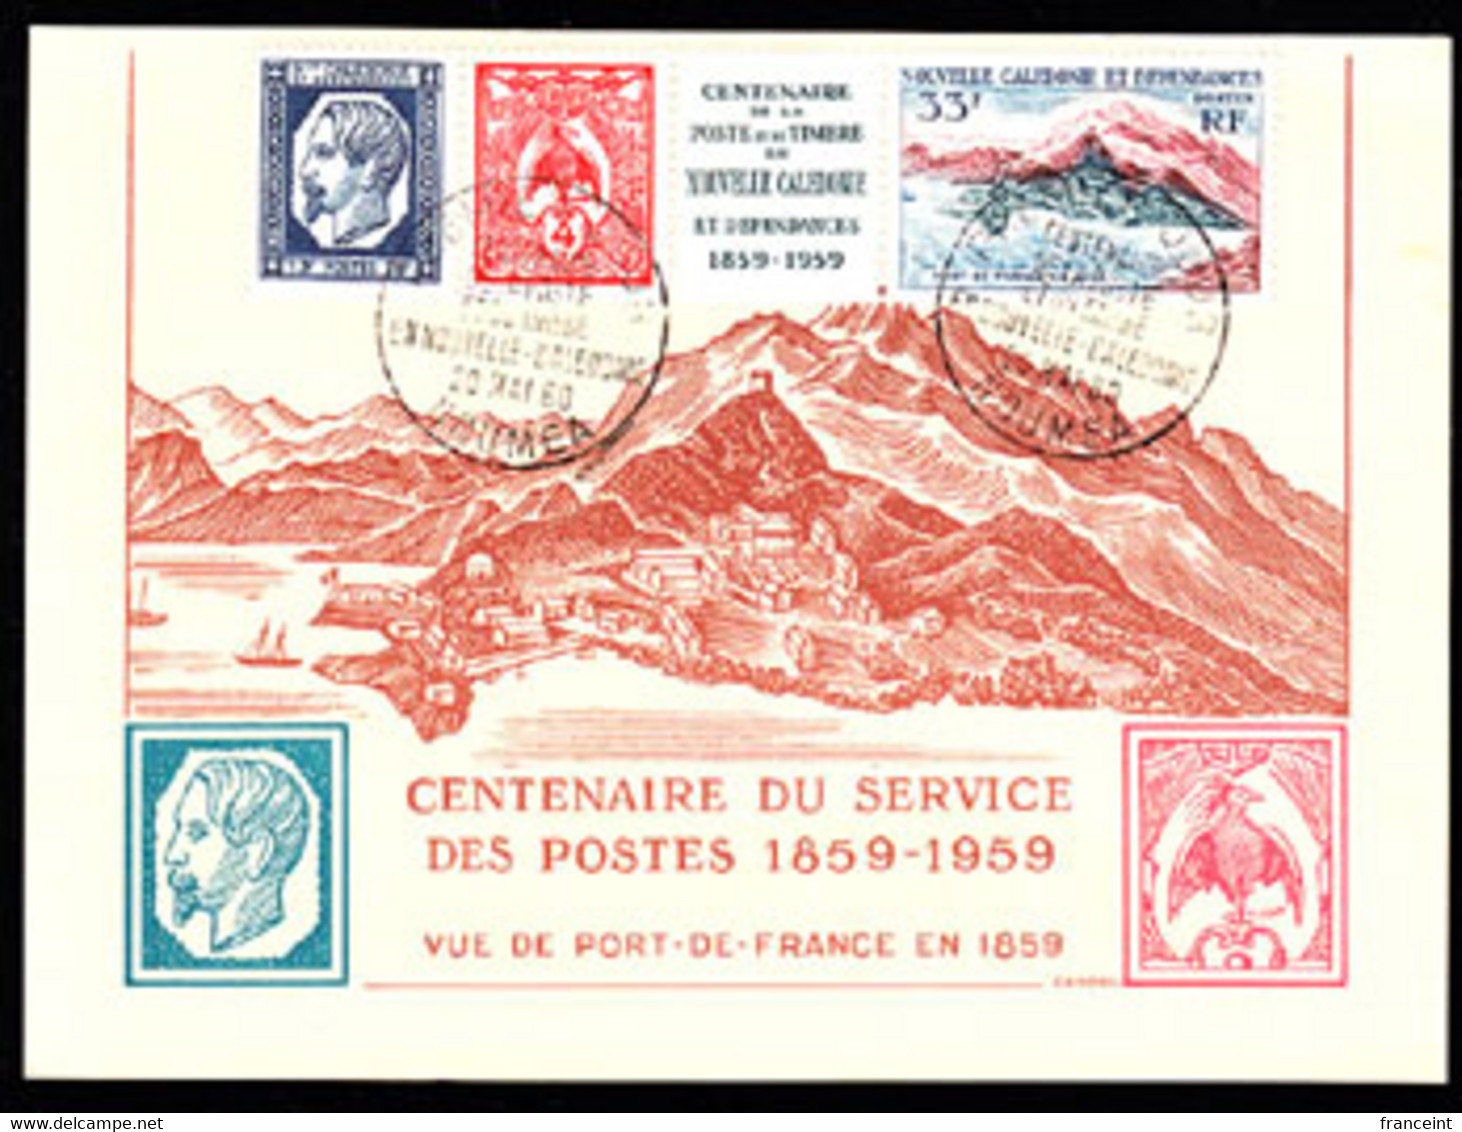 NEW CALEDONIA (1960) New Caledonia Stamp Centenary. Maximum Card With First Day Cancel. Scott No 317a, Yvert No BF2. - Maximumkarten